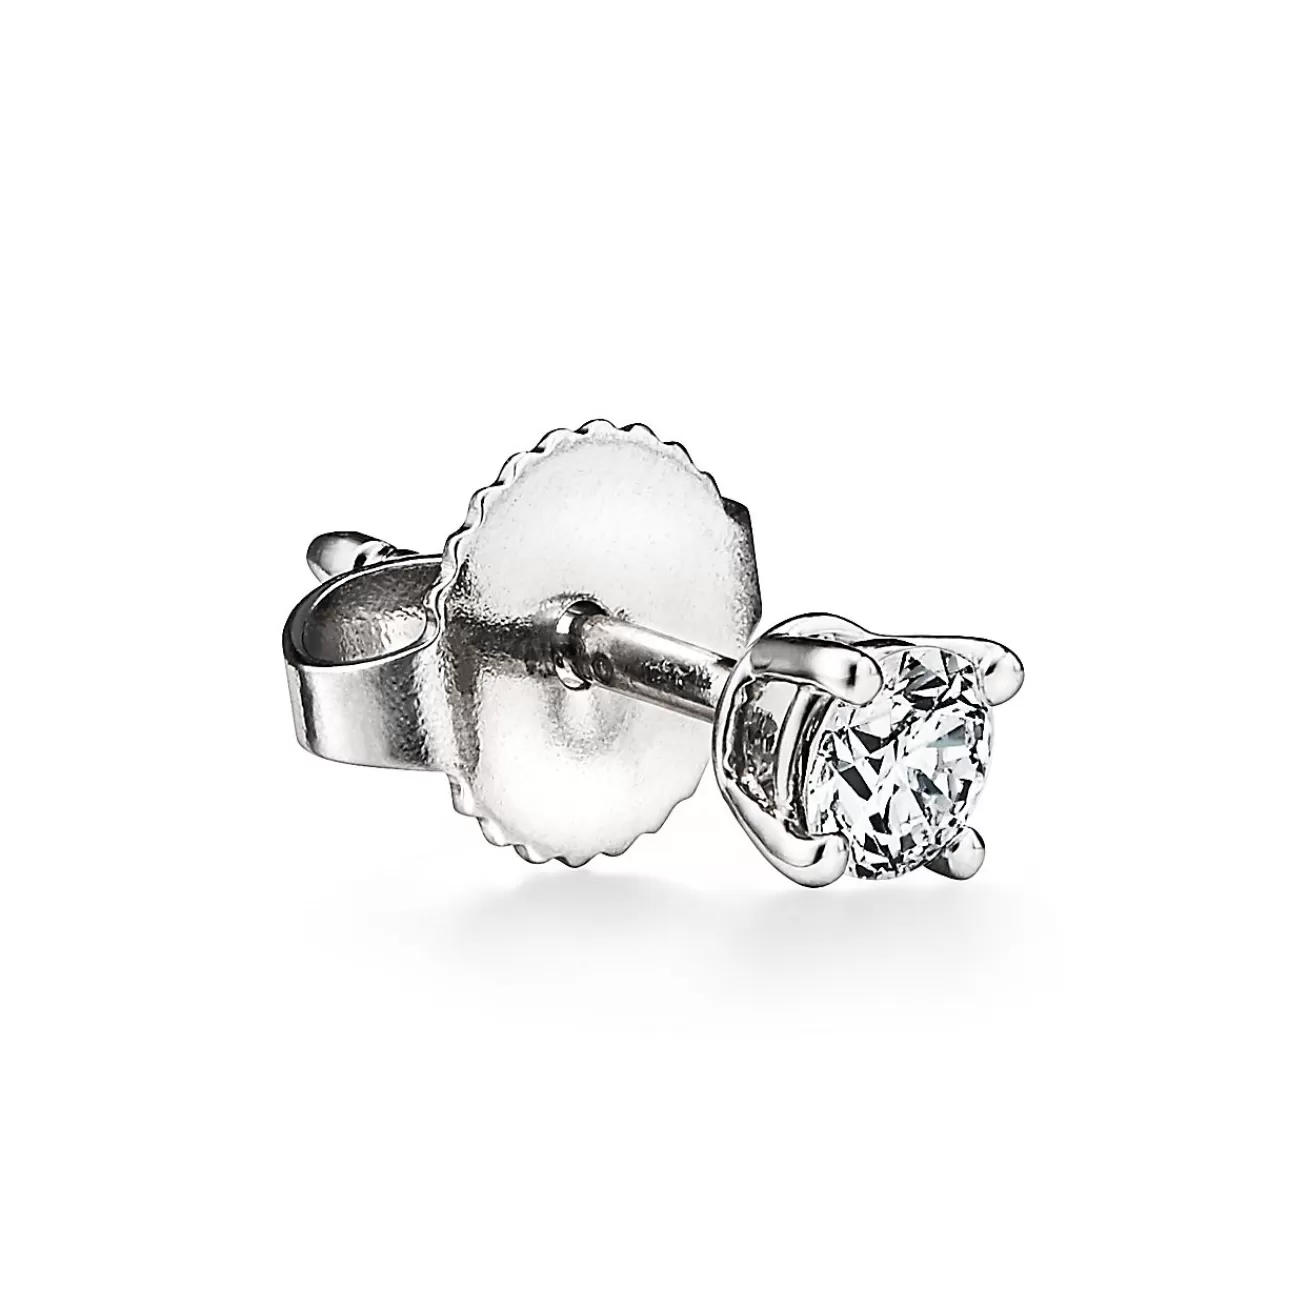 Tiffany & Co. Diamond Earrings in Platinum | ^ Earrings | Gifts for Her